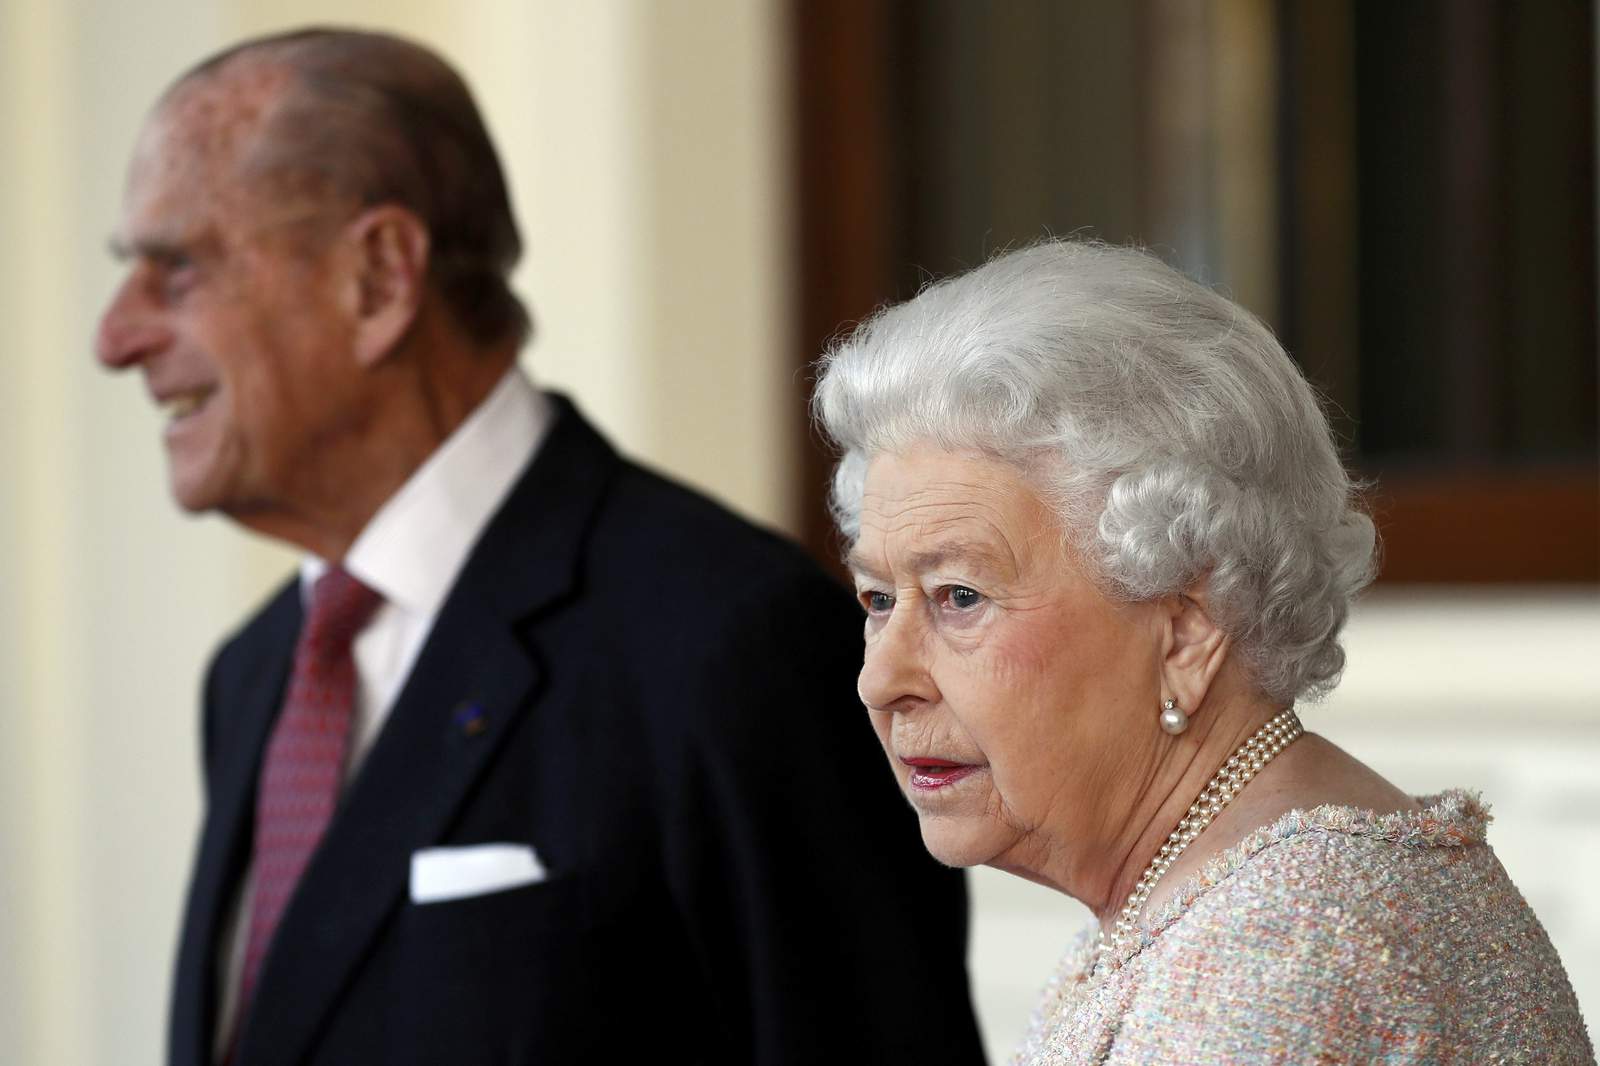 Queen Elizabeth II and husband receive COVID-19 vaccinations